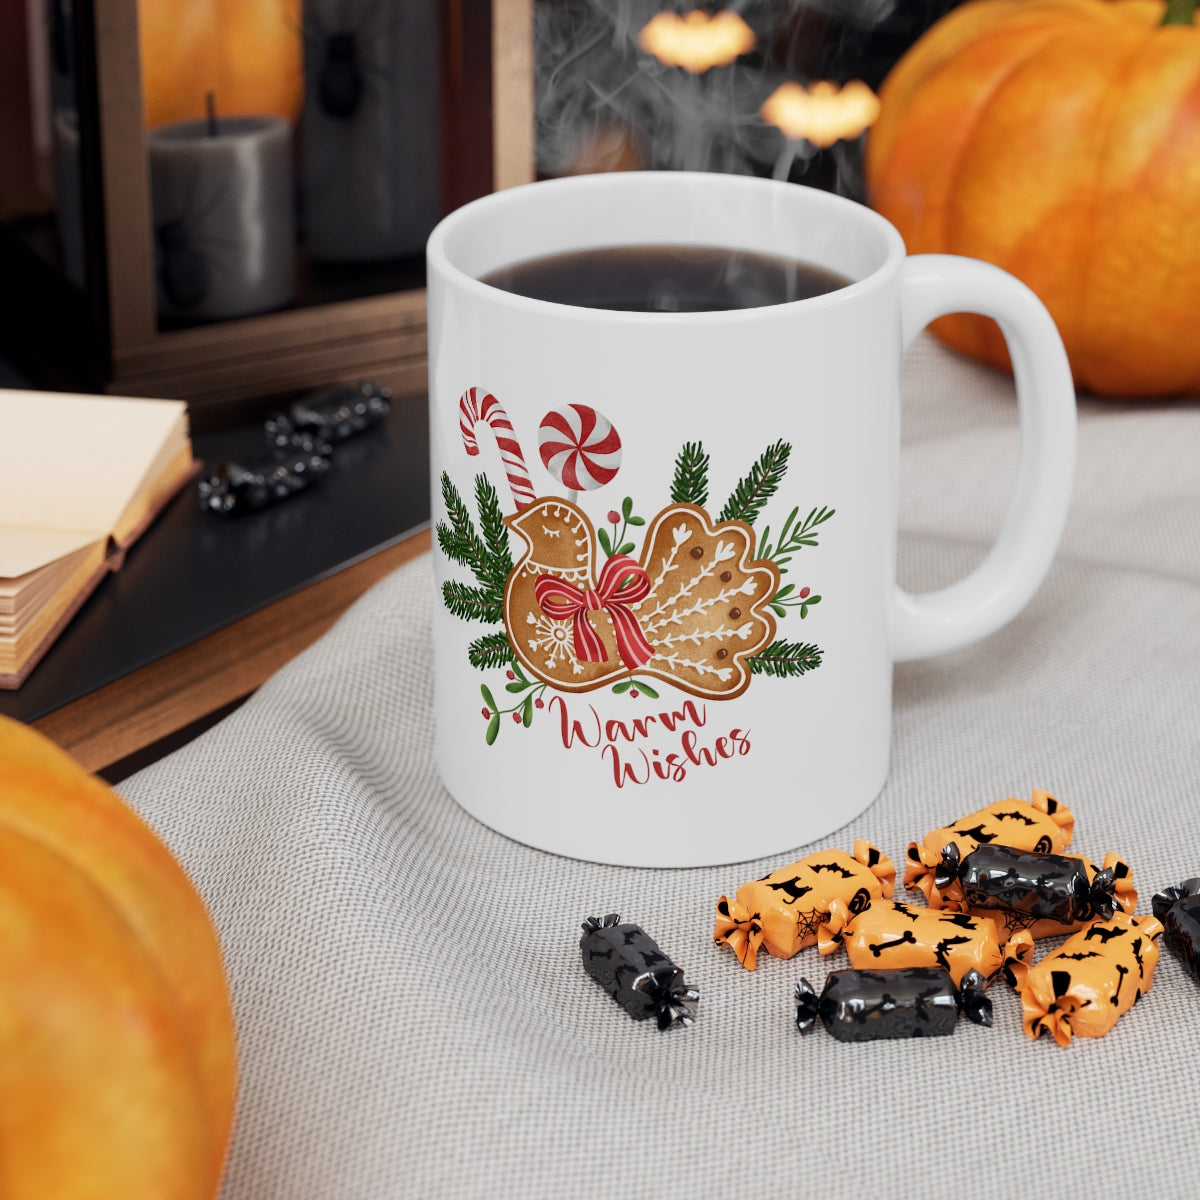 Warm Wishes for Christmas Ceramic Mug